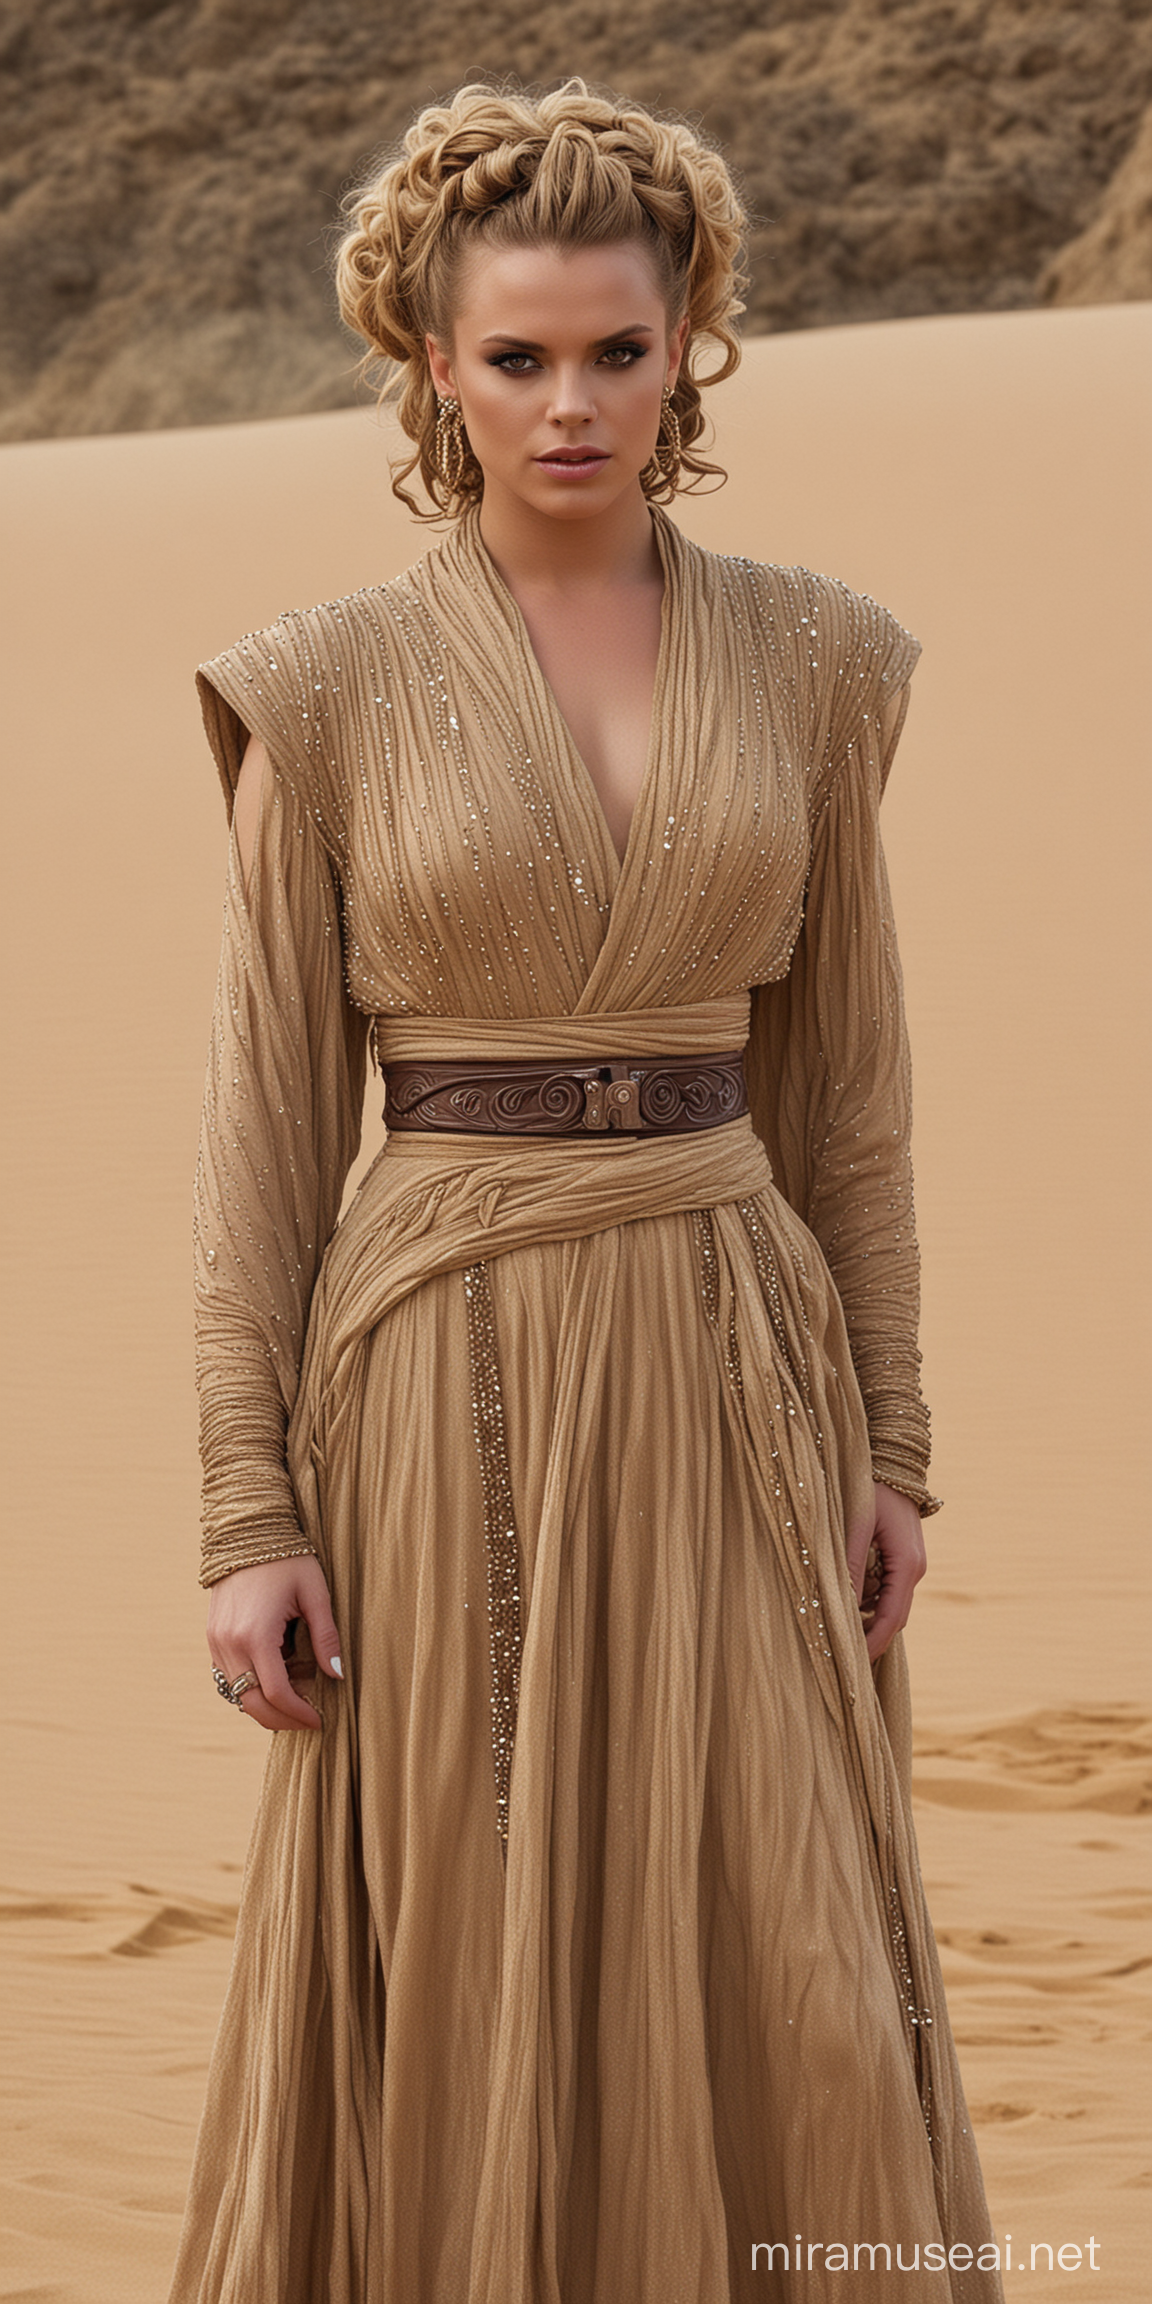 "Anakin Skywalker" "Drag Queen" sand femme